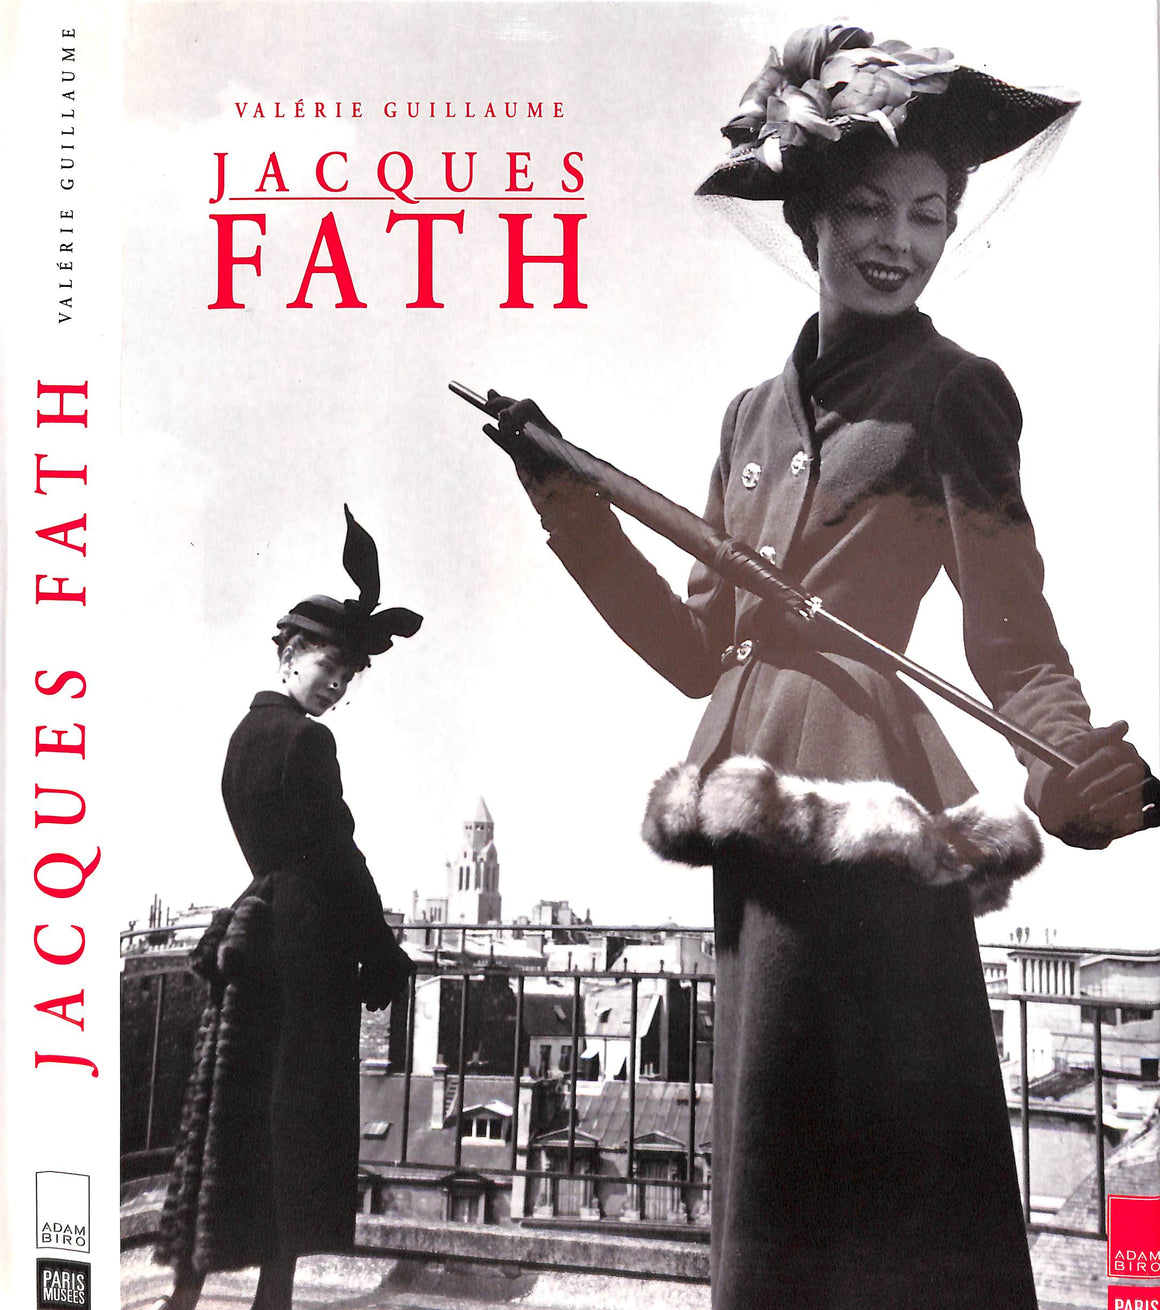 "Jacques Fath" 1993 GUILLAUME, Valerie